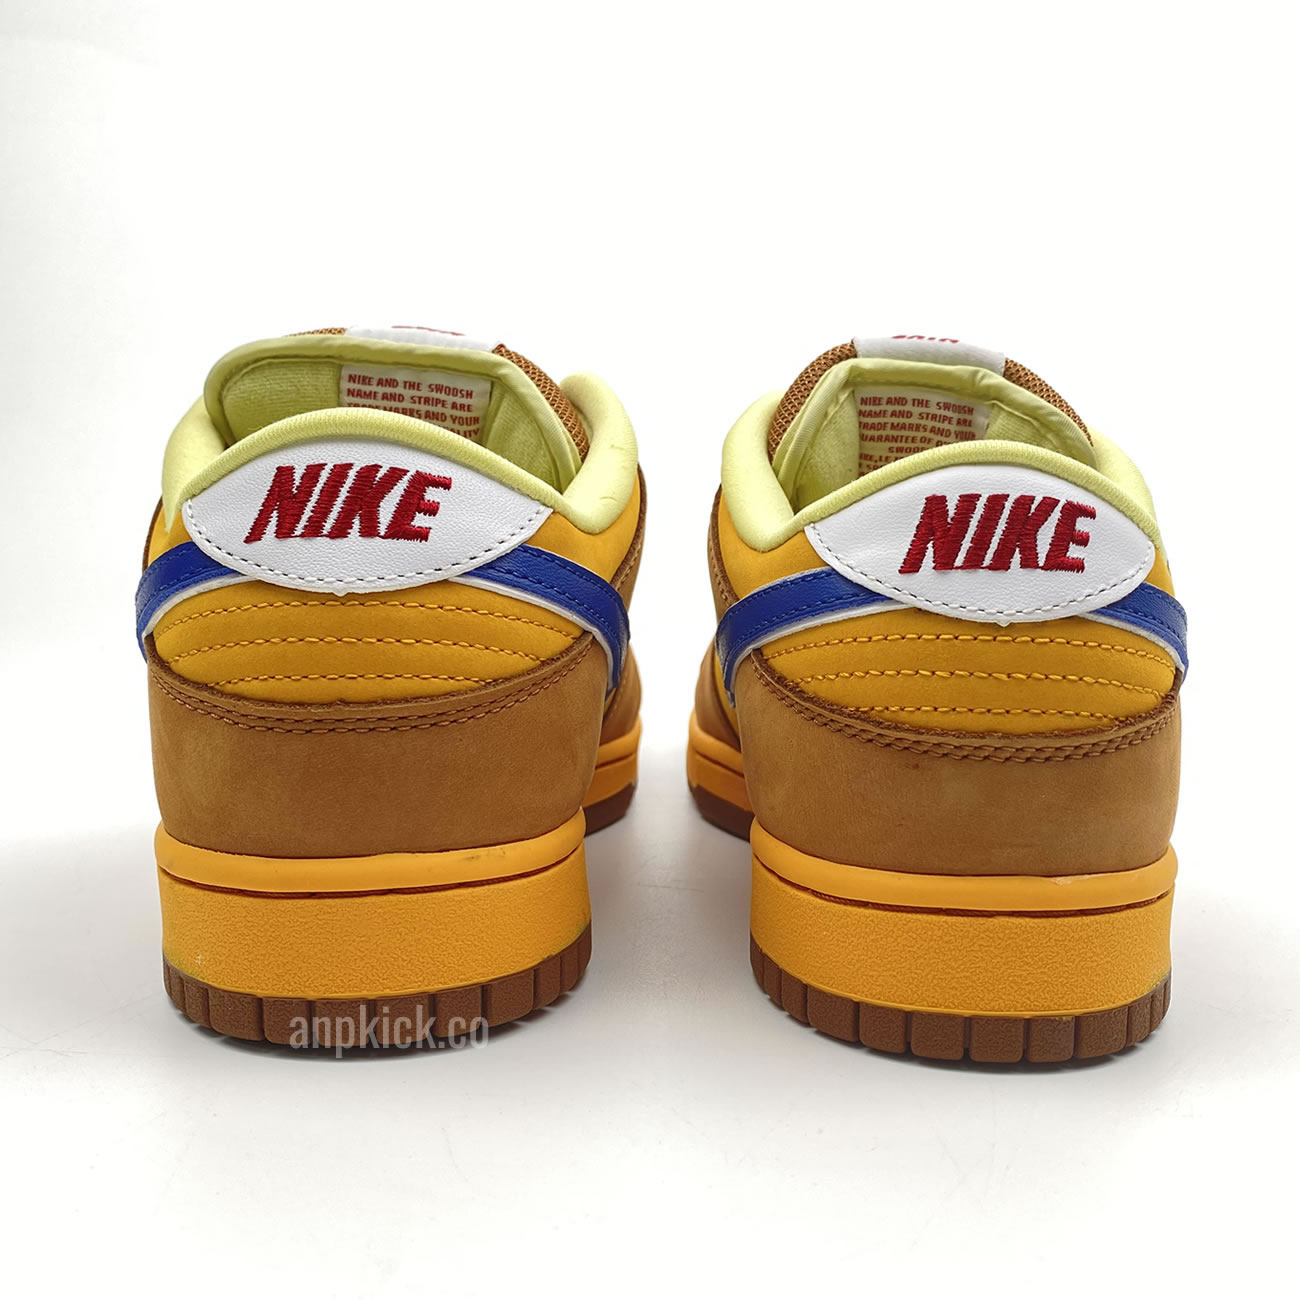 Nike SB Dunk Low Premium Newcastle "Brown Ale" 313170-741